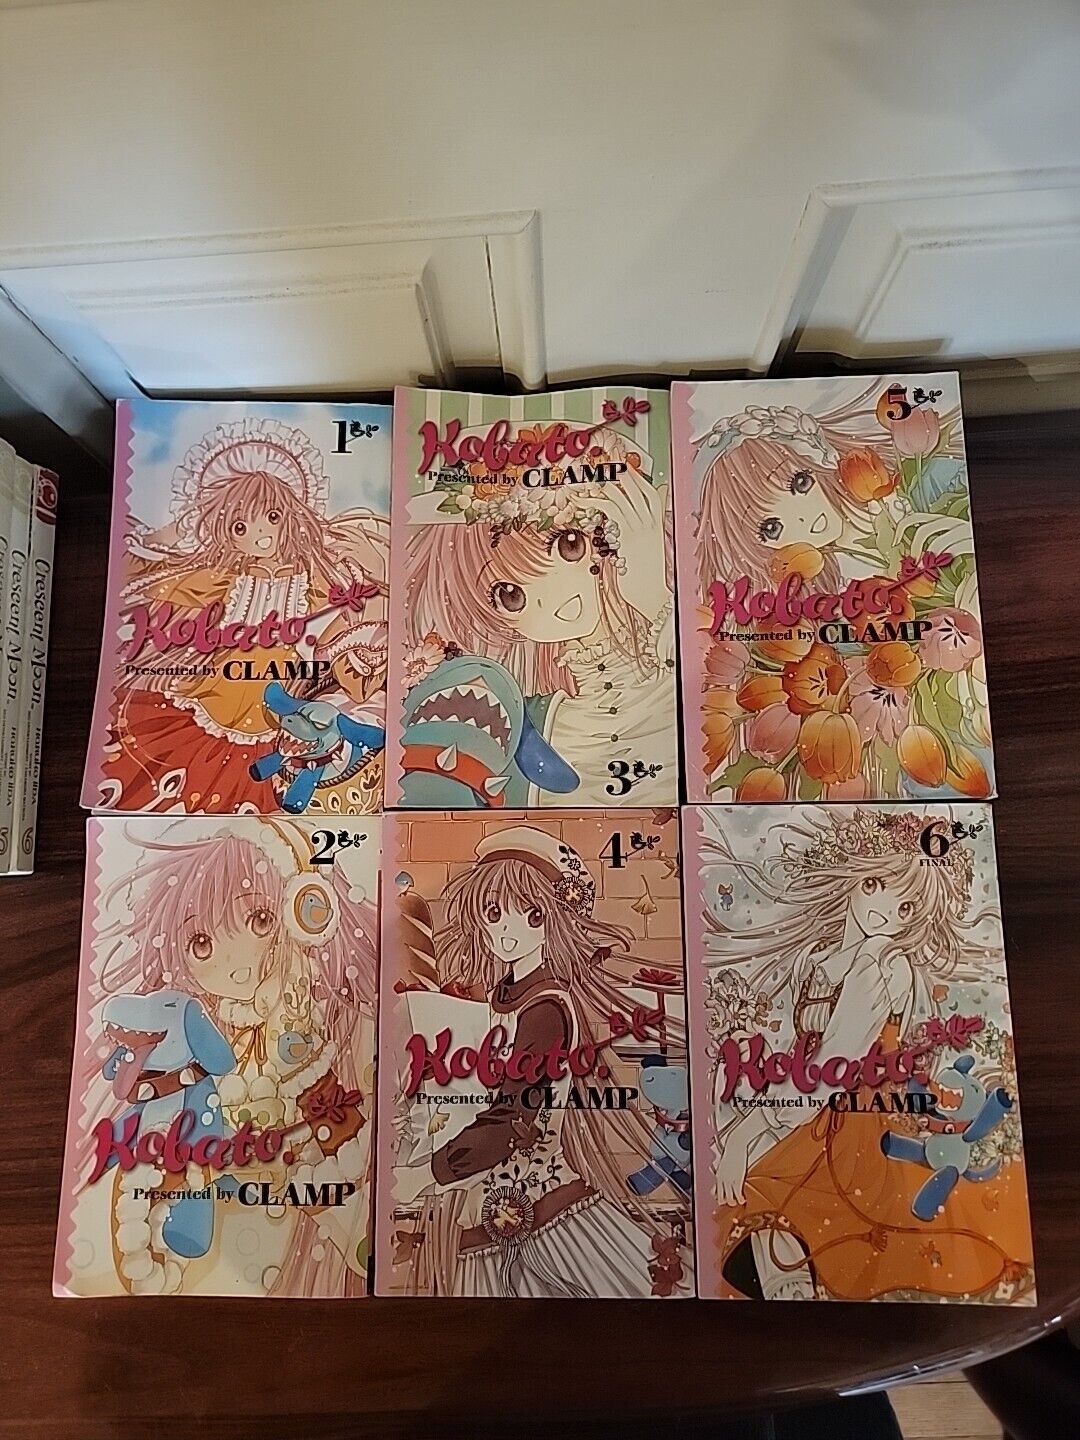 Kobato. Presented By CLAMP, COMPLETE Volumes 1-6, OOP English Manga 1 2 3 4 5 6